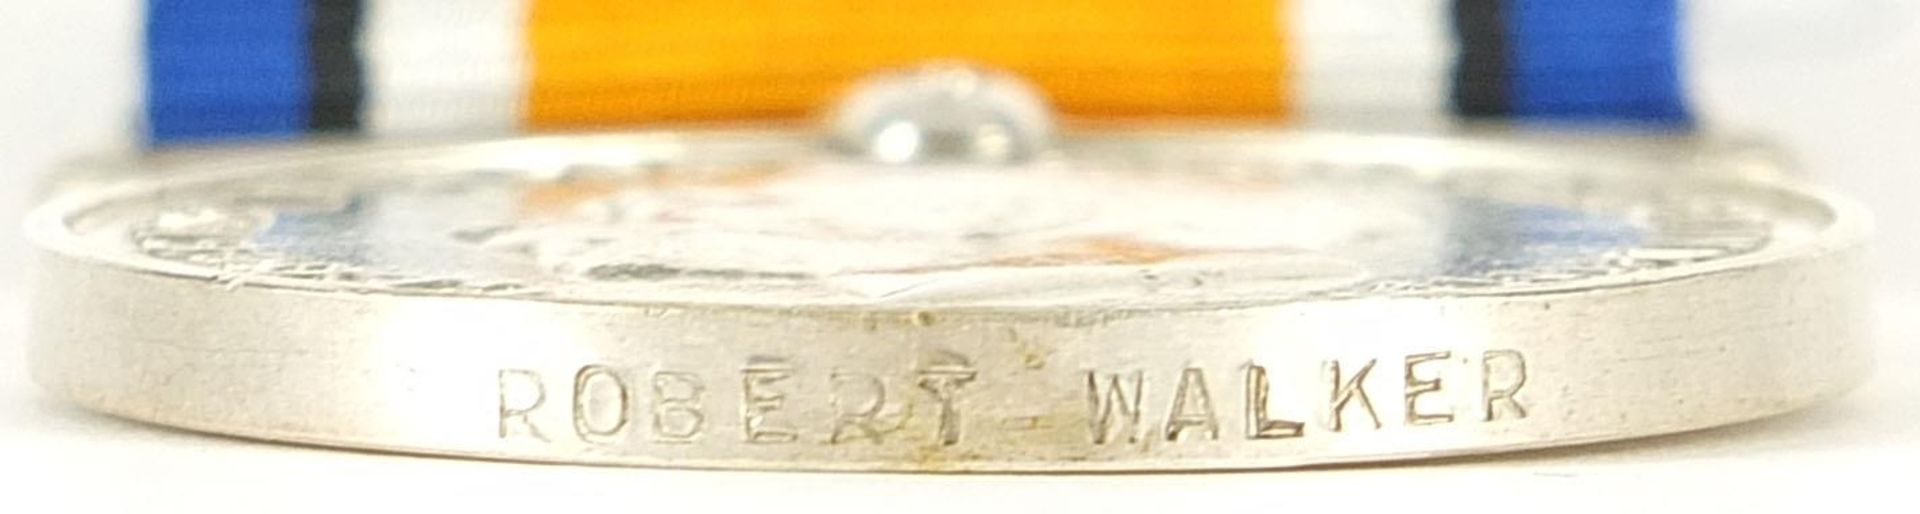 British military World War I pair awarded to Robert Walker - Image 5 of 6